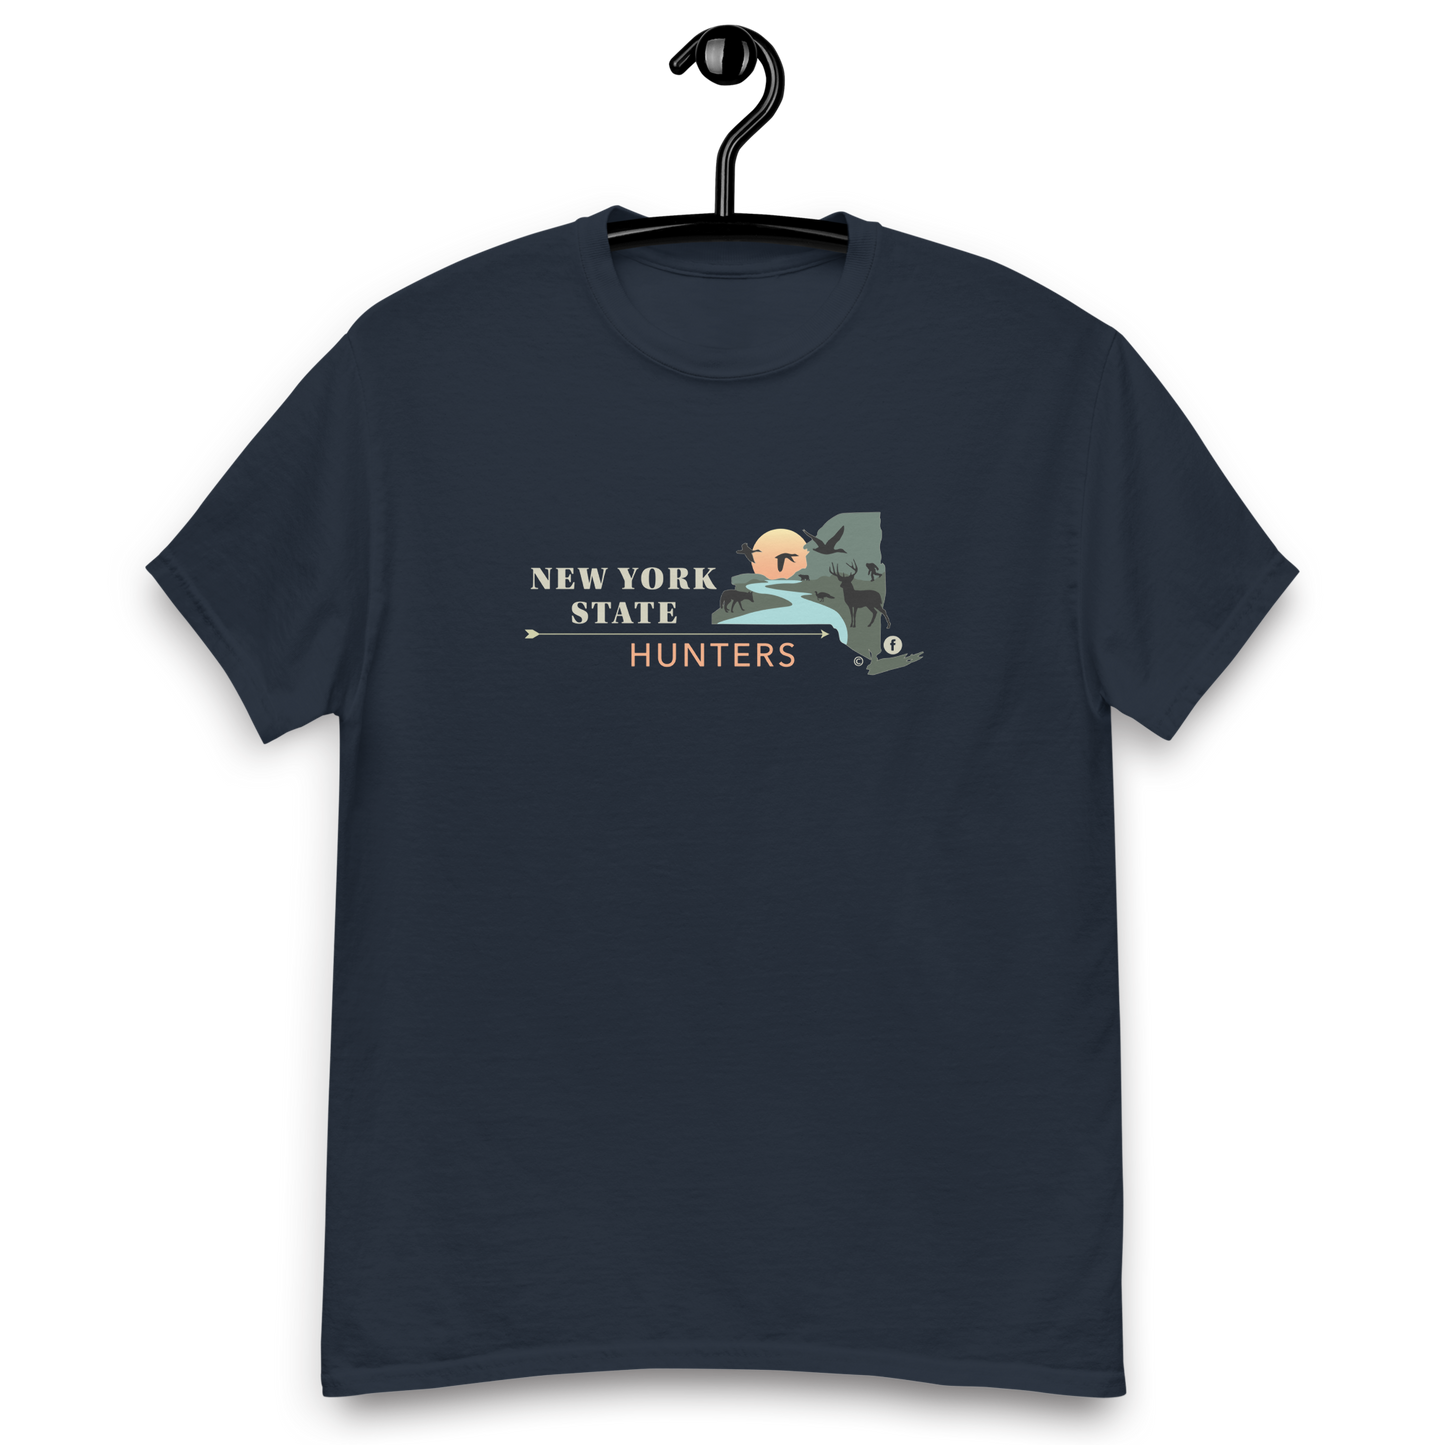 New York State Hunters Men's Classic T-shirt - Design 2